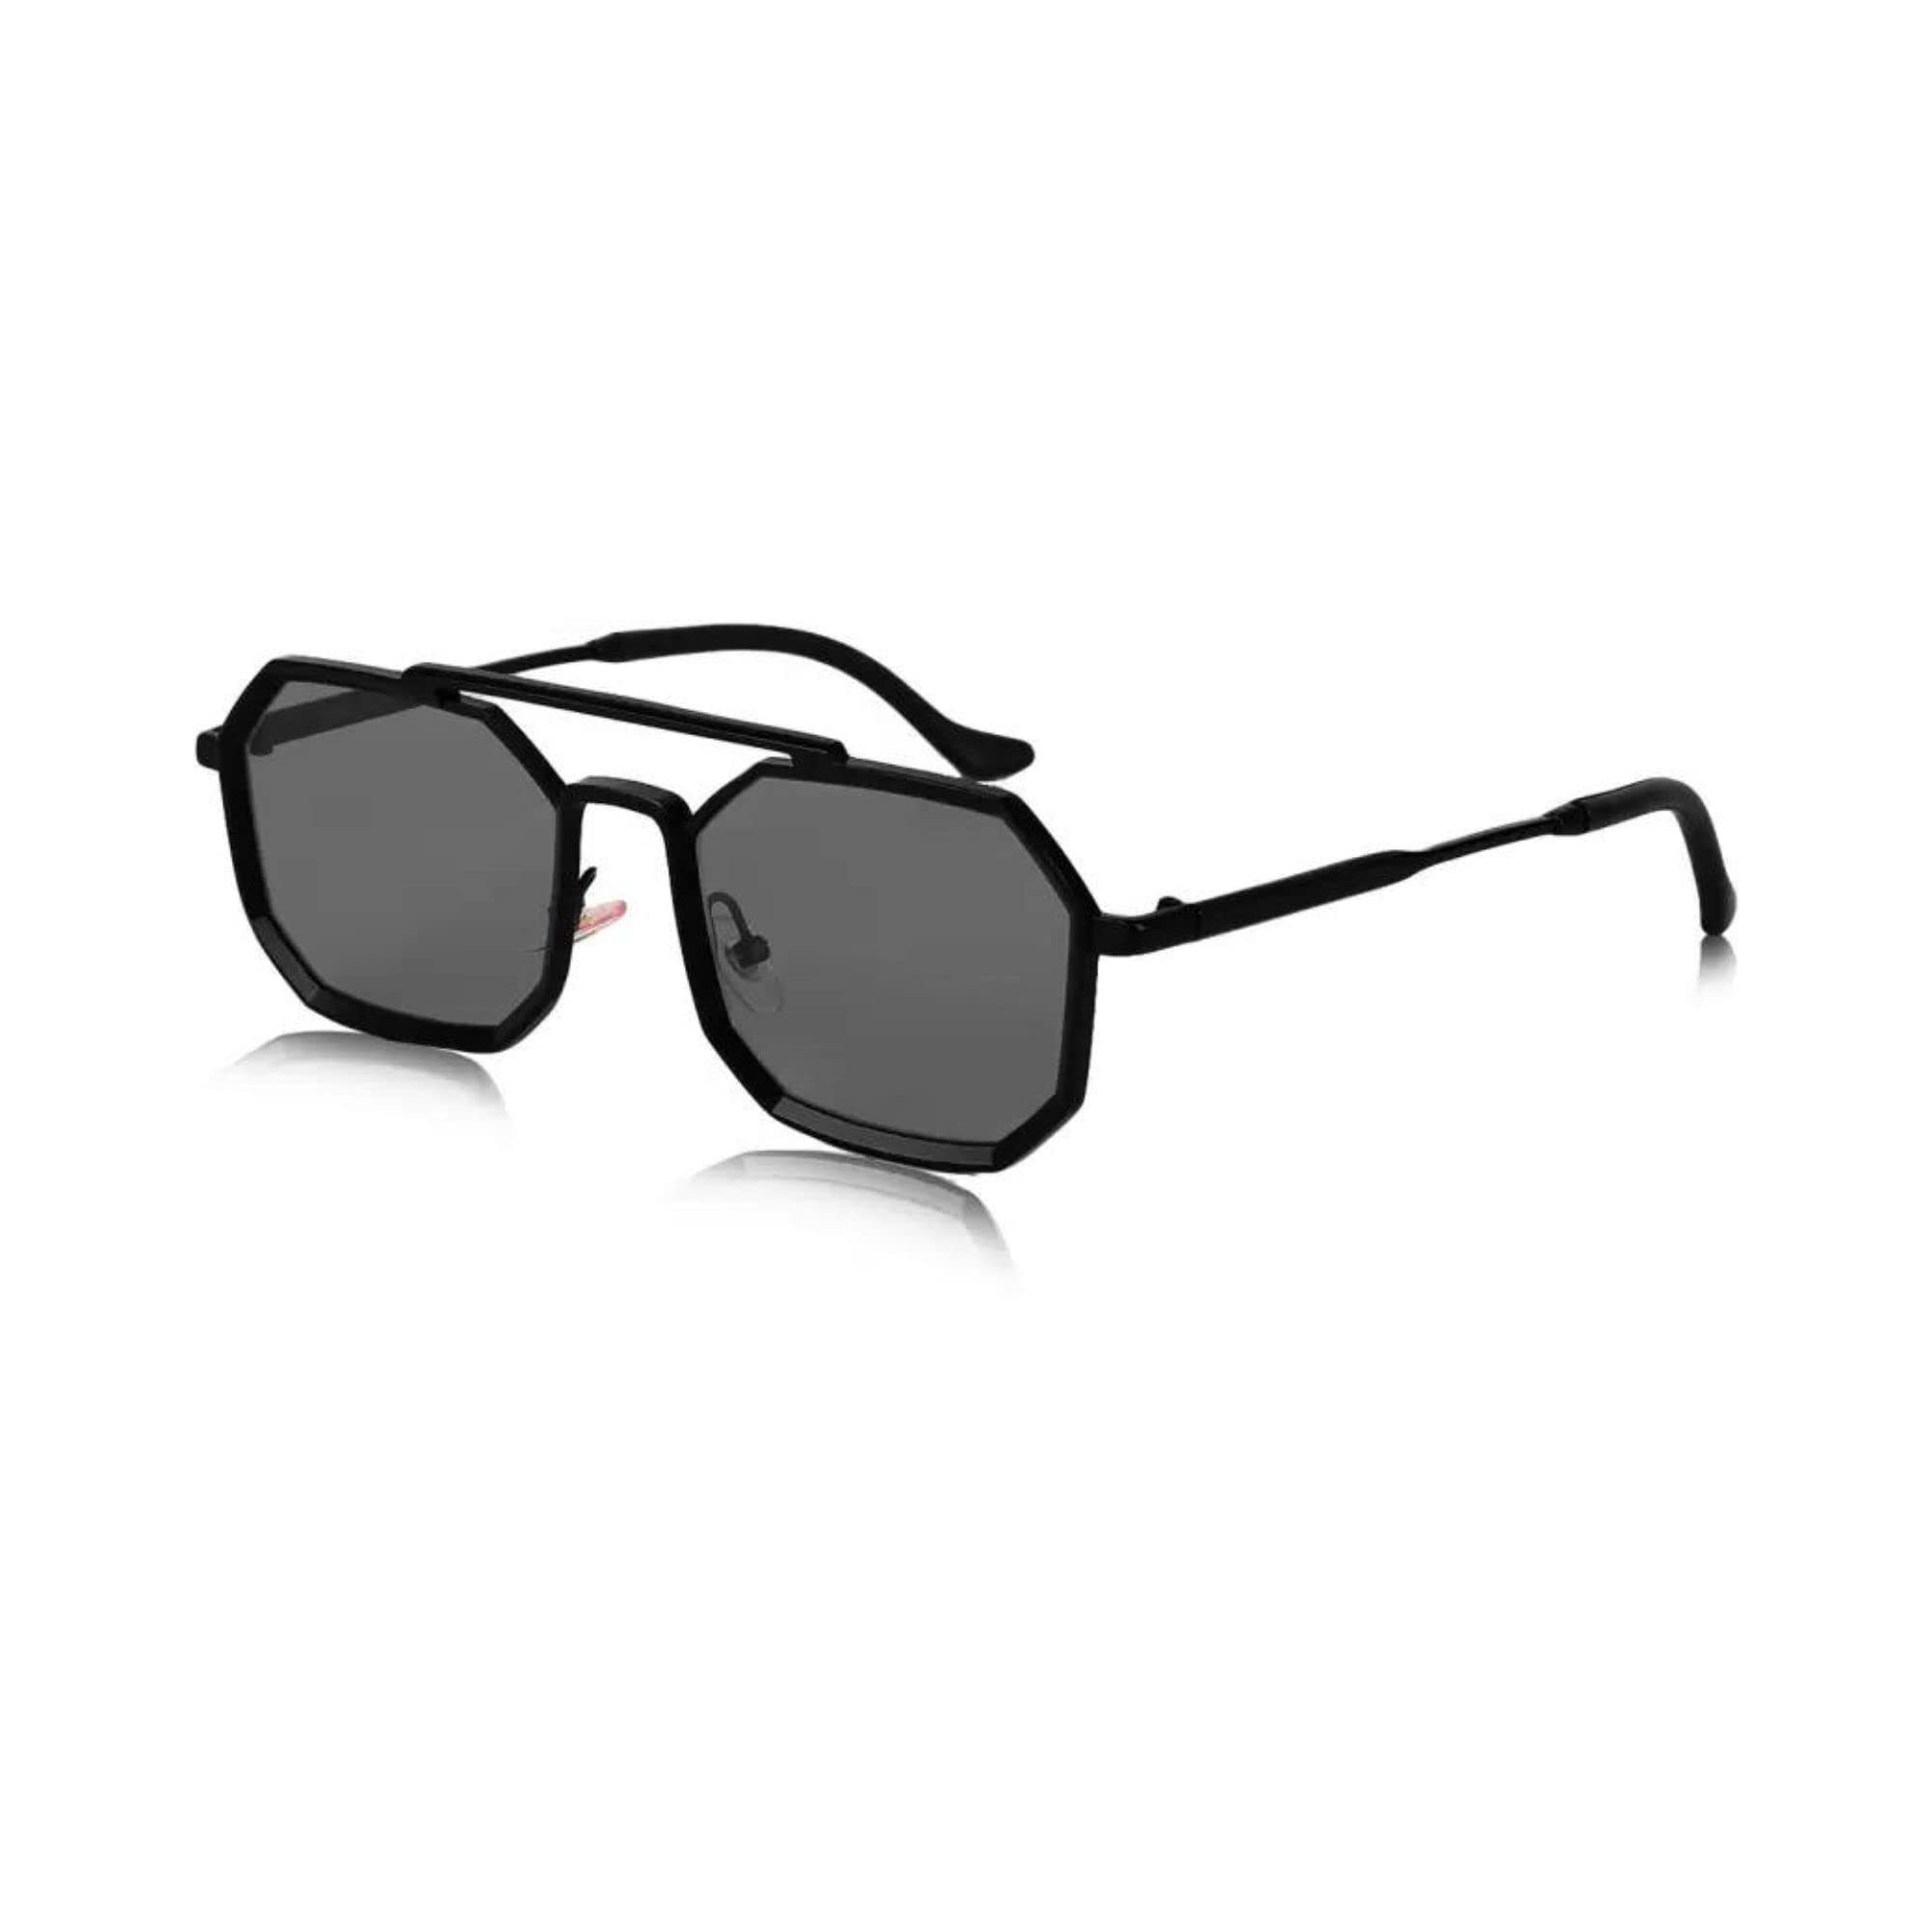 4Flaunt Full Rim Irregular Rectangular Sunglasses | Goggles For Men & Women | 100% UV Protected | Metal Frame With Spring Hinges | Medium (Black, Black)